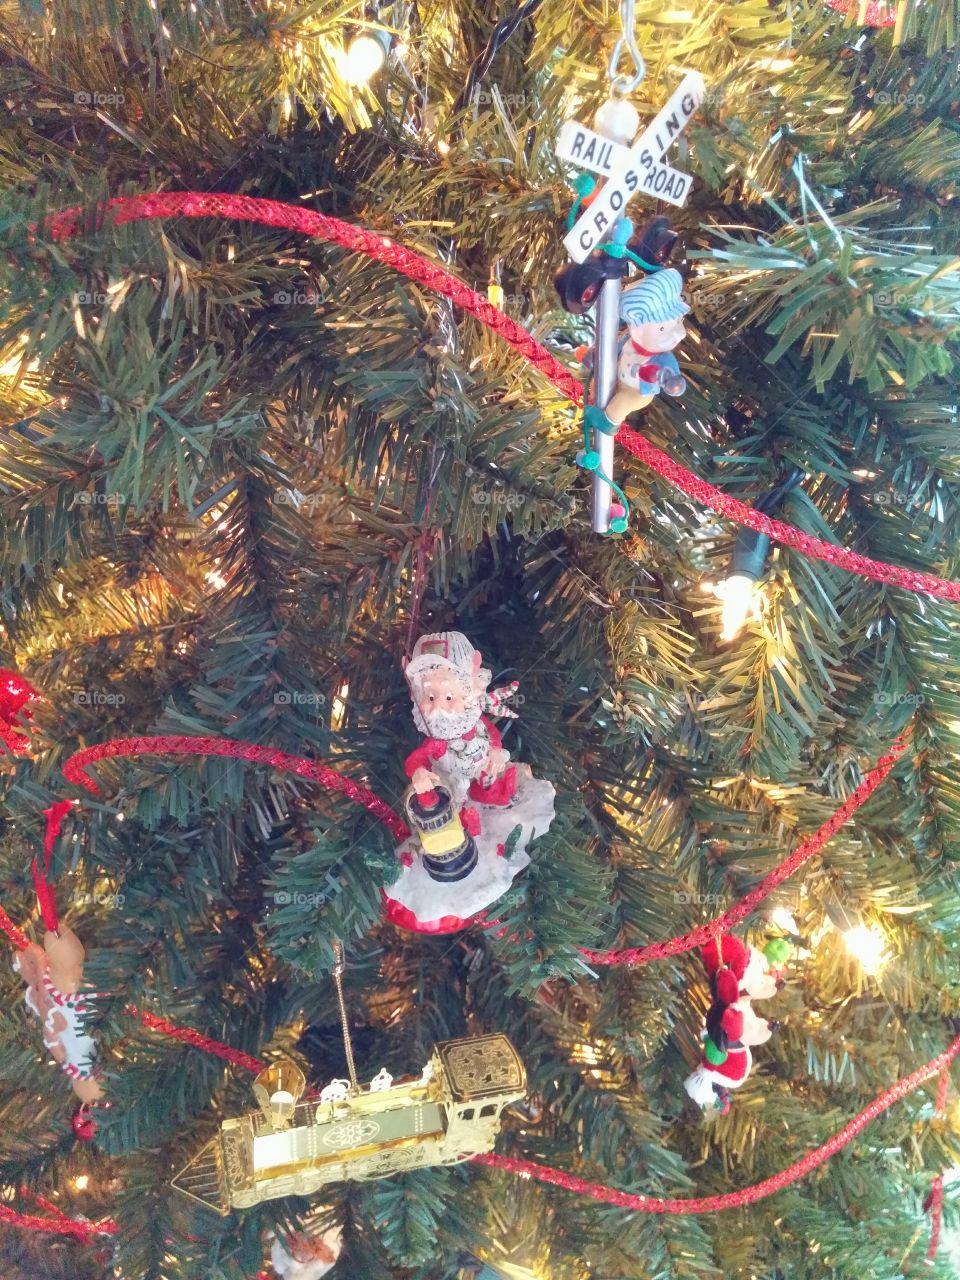 Retired Amtrak Railroad Employee Christmas tree